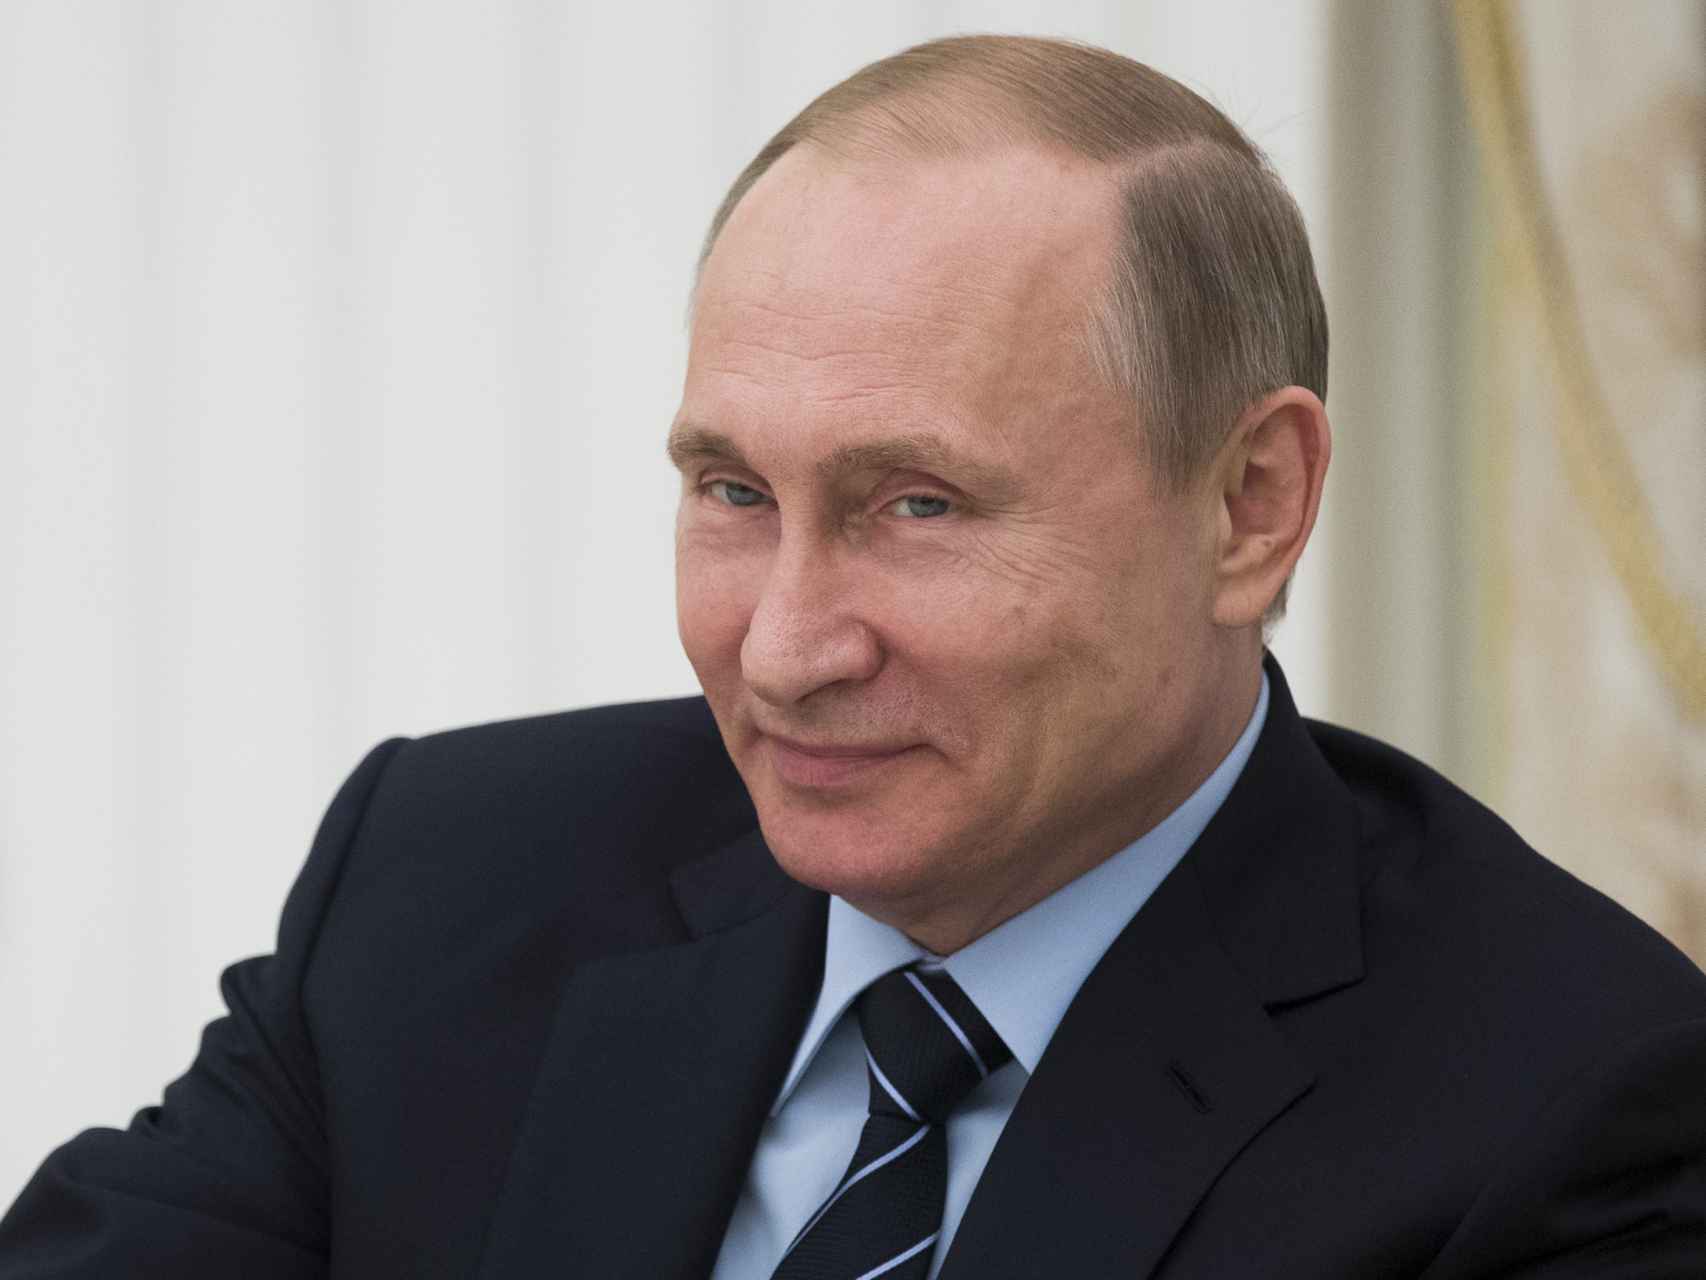 Vladimir Putin durante un acto oficial en Moscú en abril de 2016.